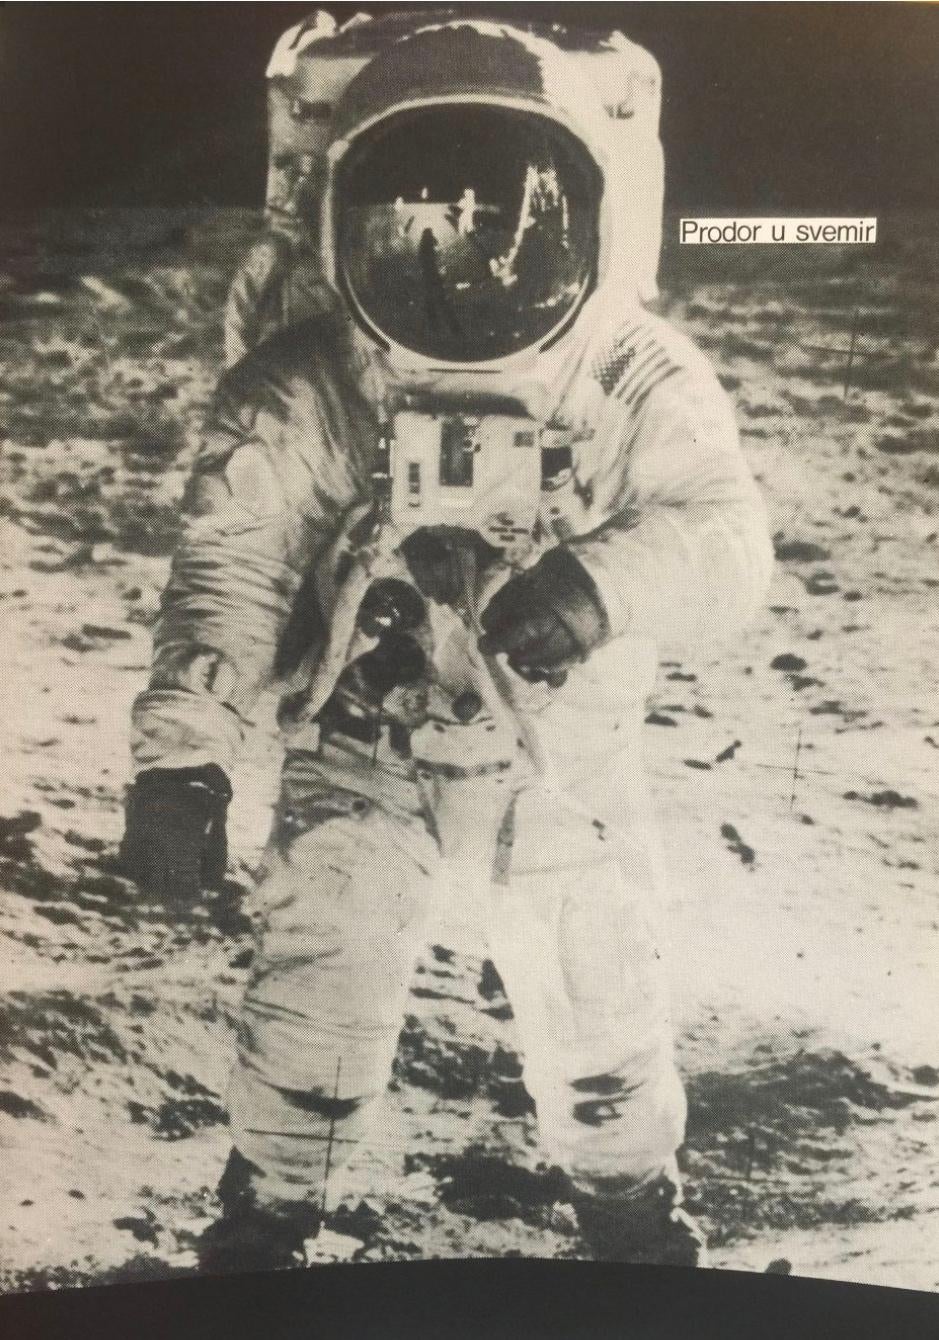 Modern Original Vintage Poster, Boris Bucan 'PRODOR U SVEMIR' Astronaut, 1972  For Sale